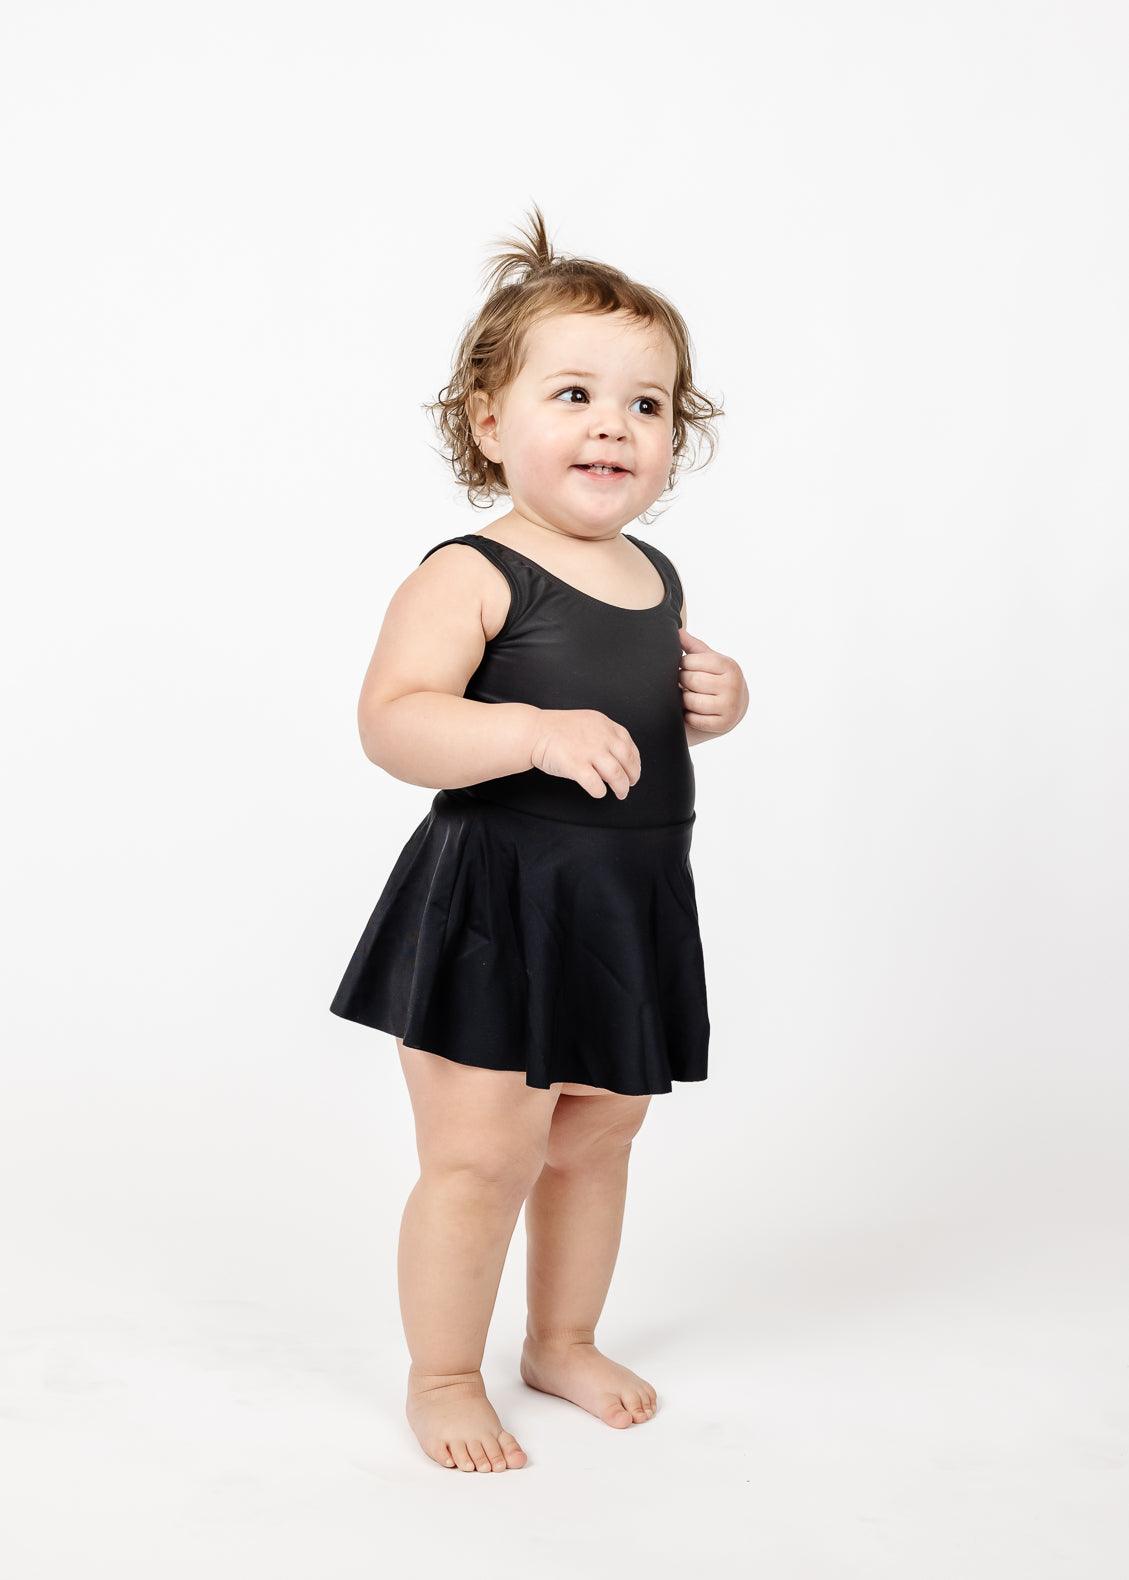 Baby Girl One-Piece Swimsuit - Black